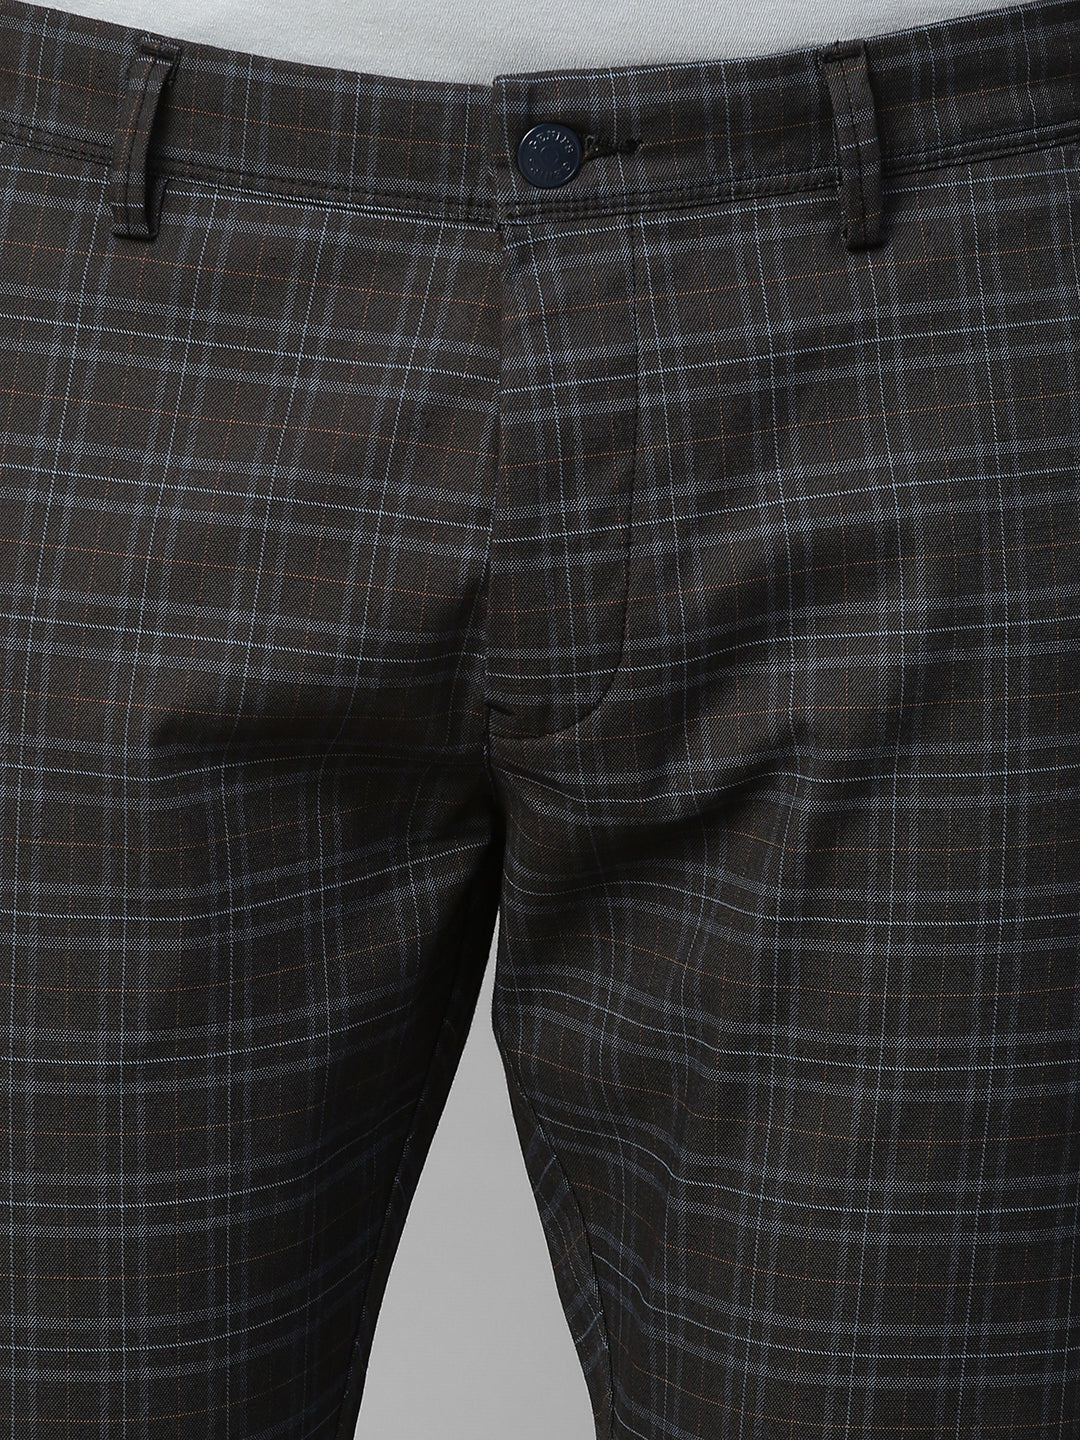 Genips Men's Black Cotton Stretch Caribbean Slim Fit Self Design Trousers